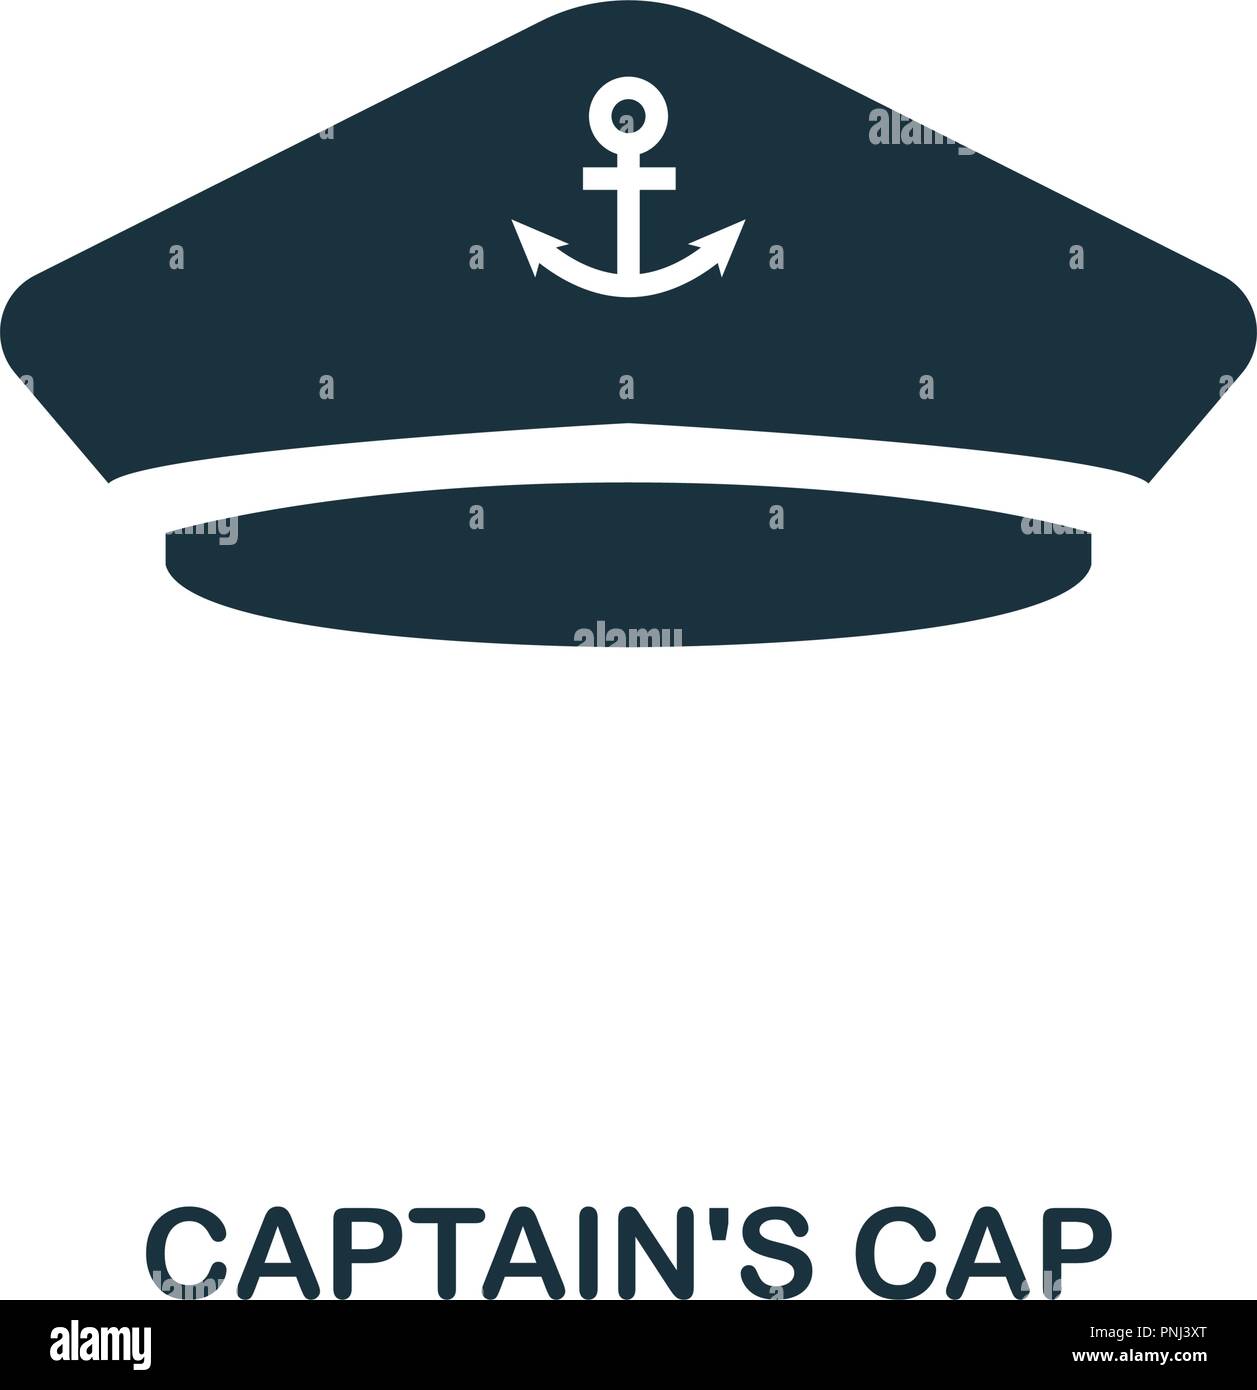 Captain'S Cap icon. Monochrome style design. UI. Pixel perfect simple symbol captain's cap icon. Web design, apps, software, print usage Stock Vector